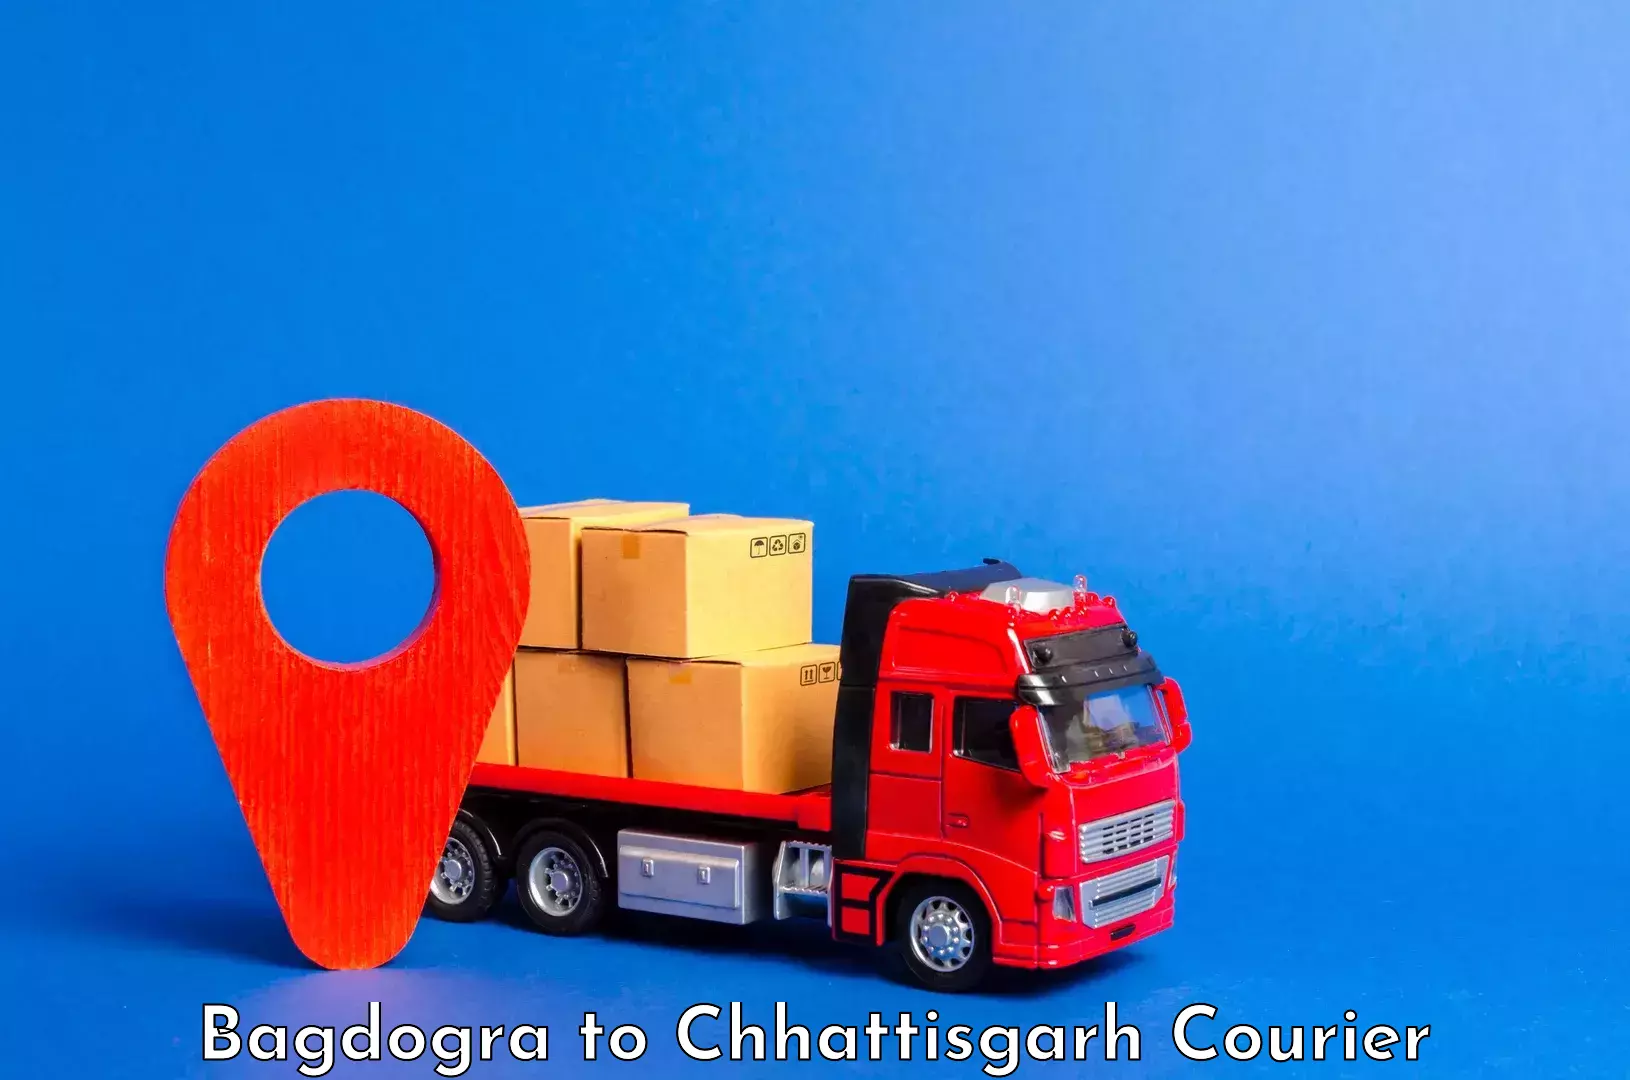 Reliable baggage delivery Bagdogra to Bhatapara